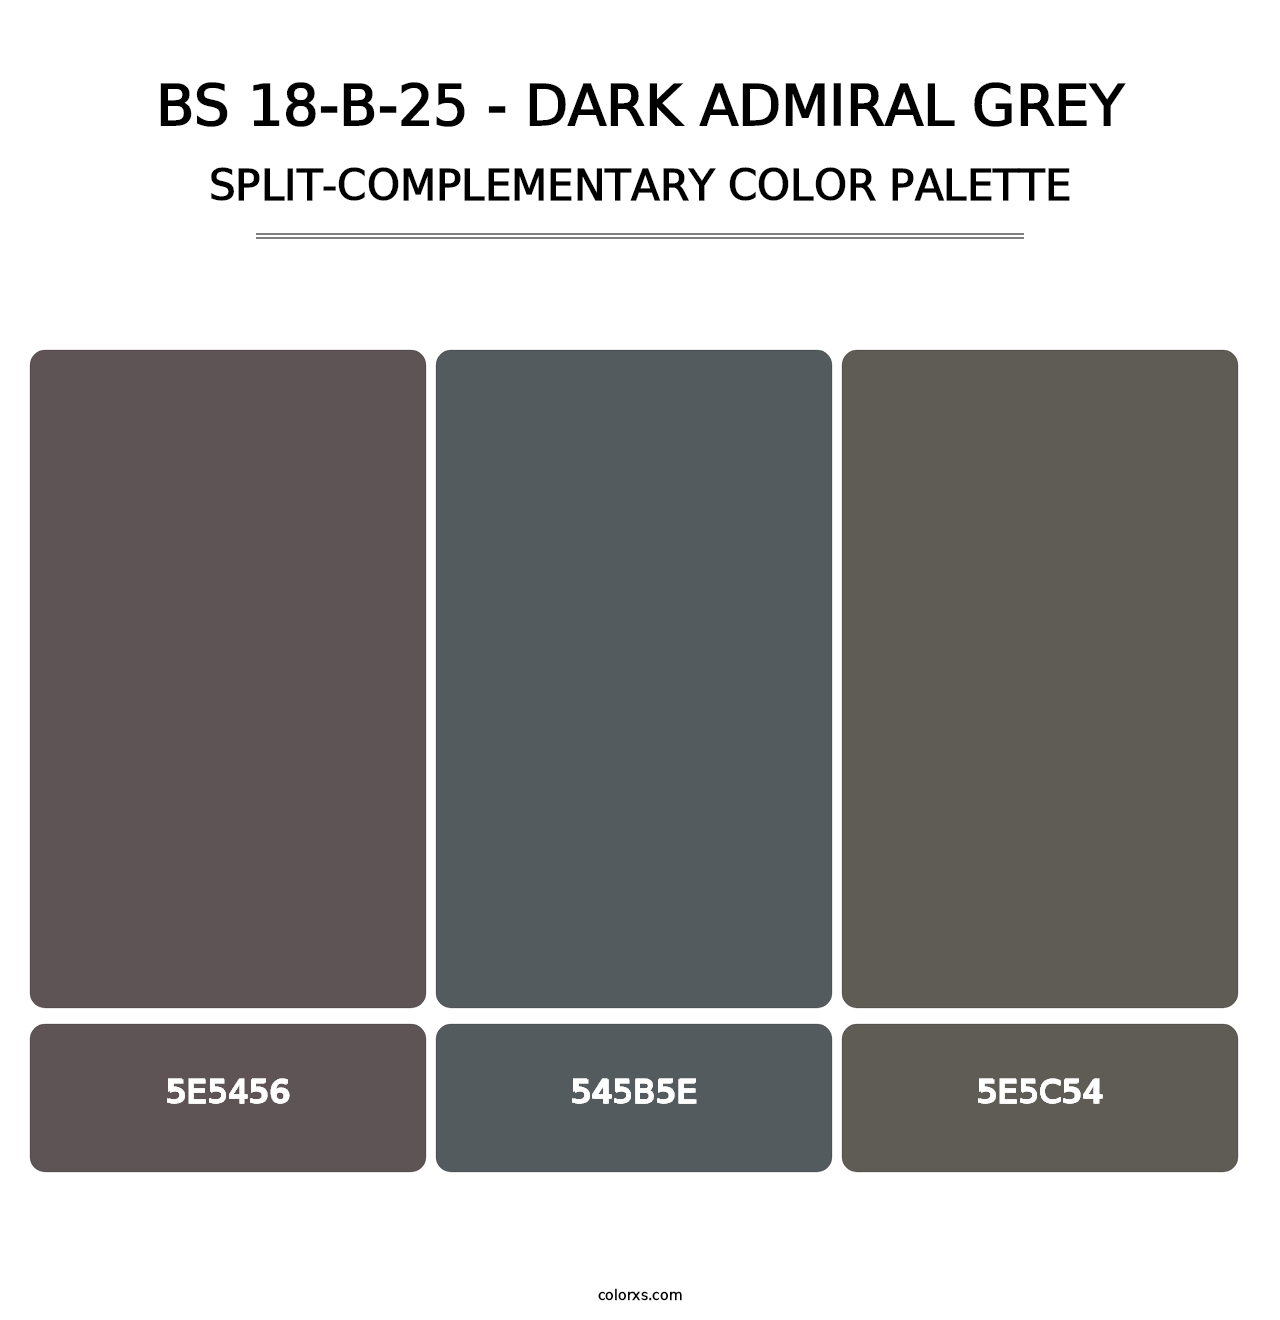 BS 18-B-25 - Dark Admiral Grey - Split-Complementary Color Palette